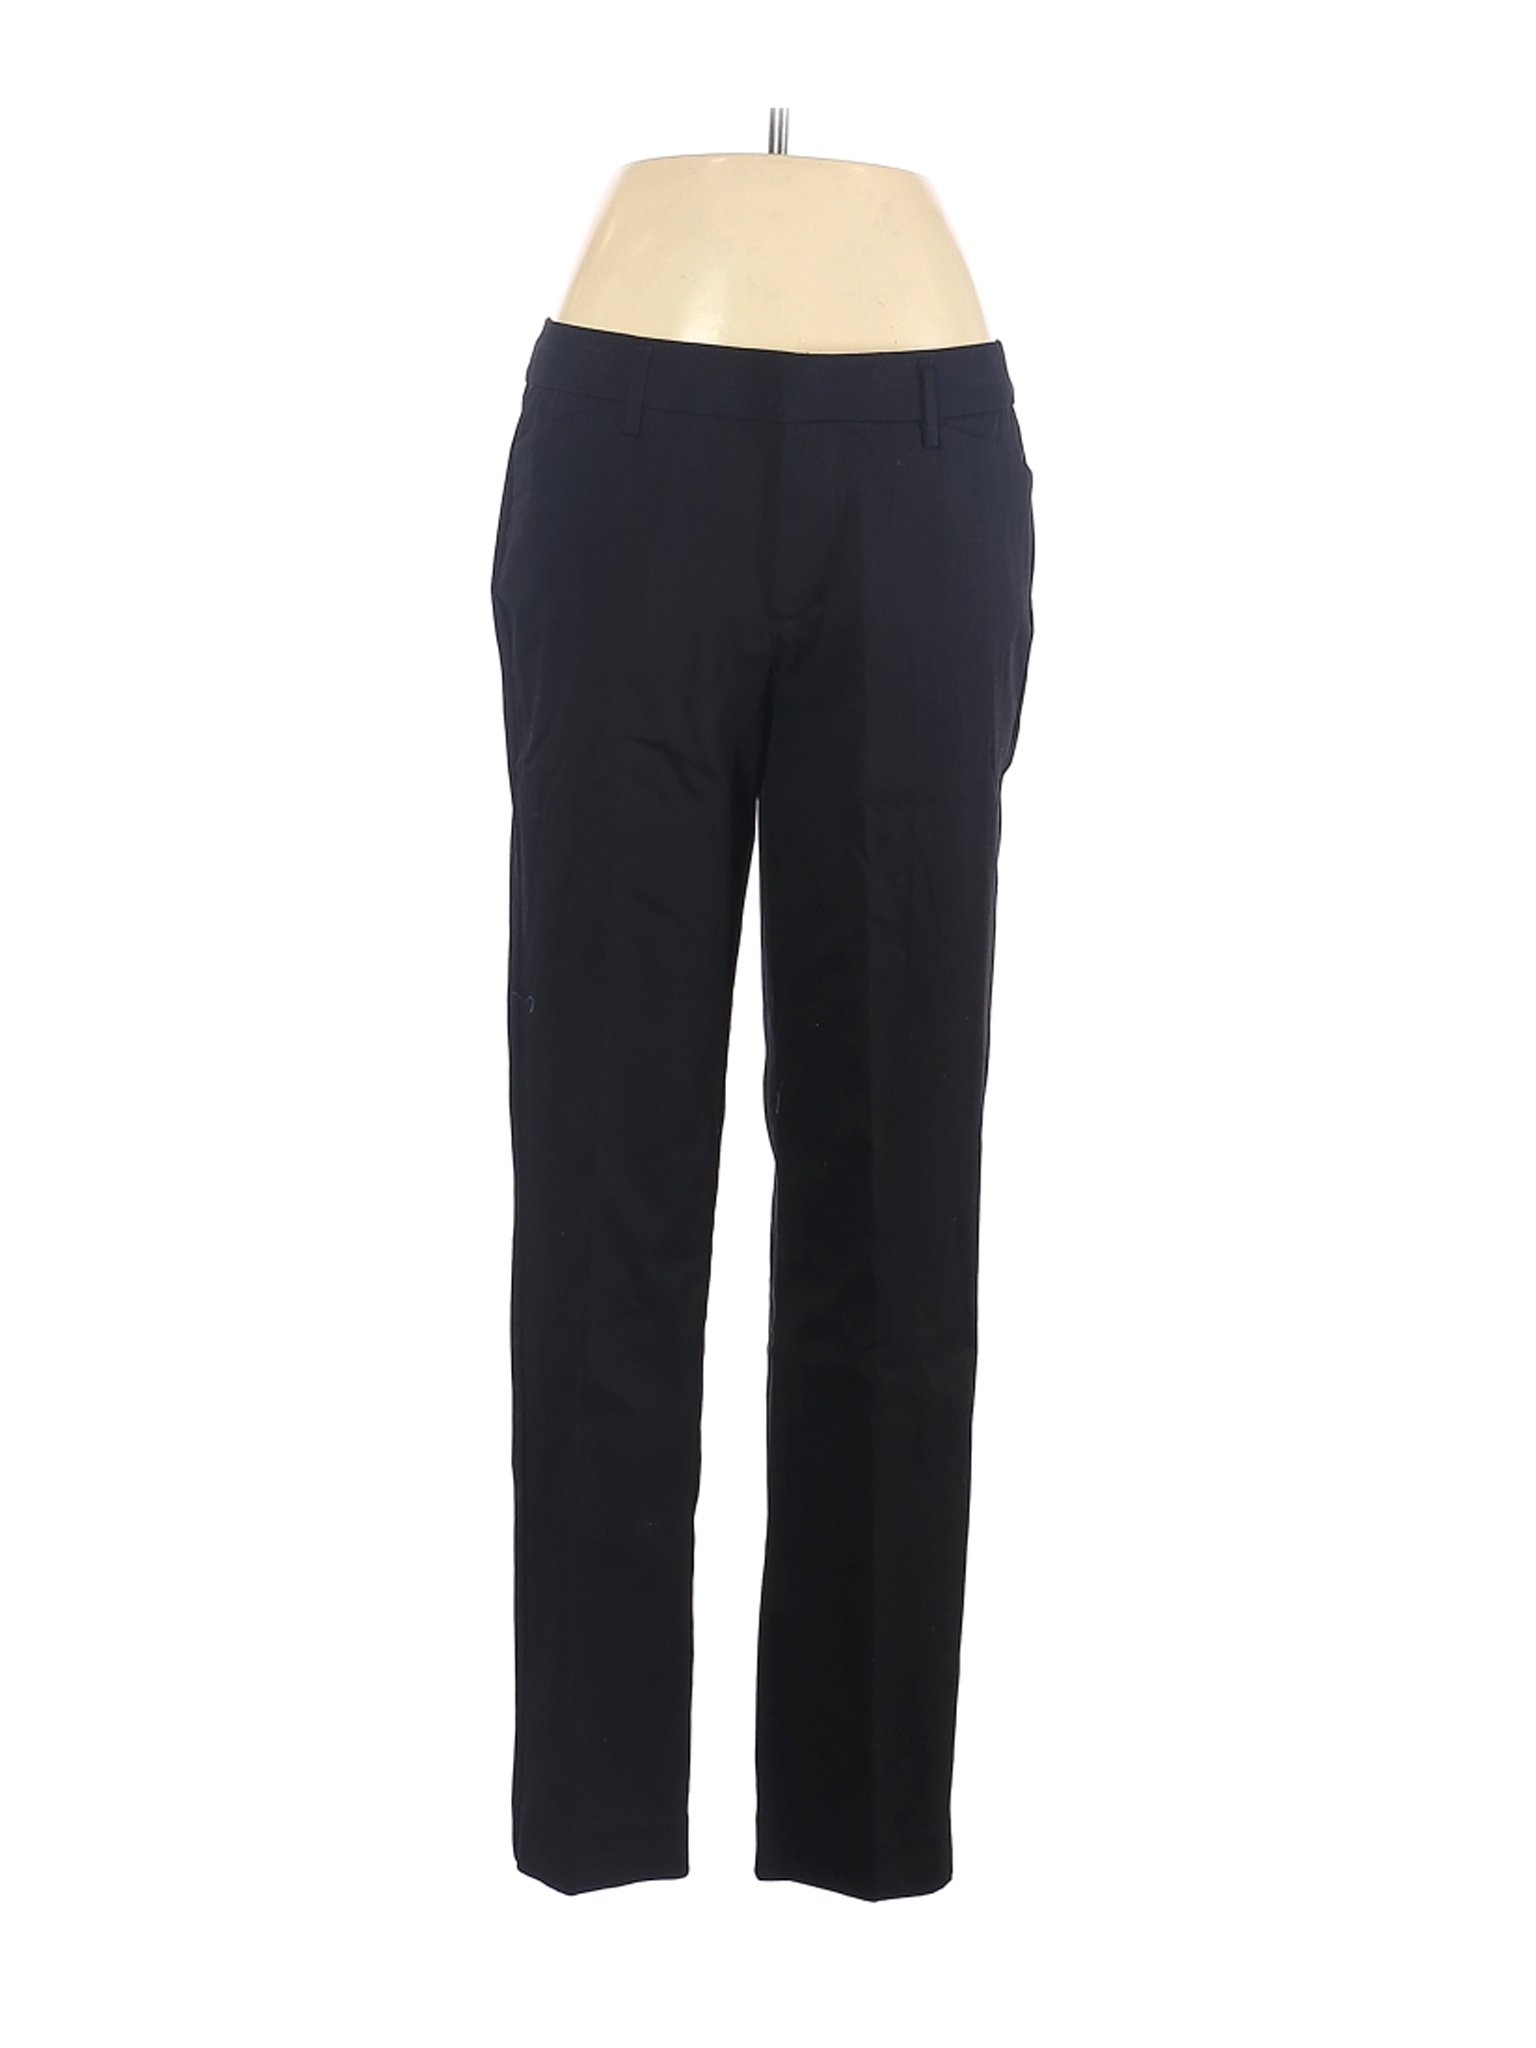 NWT Stylus Women Black Dress Pants 8 | eBay